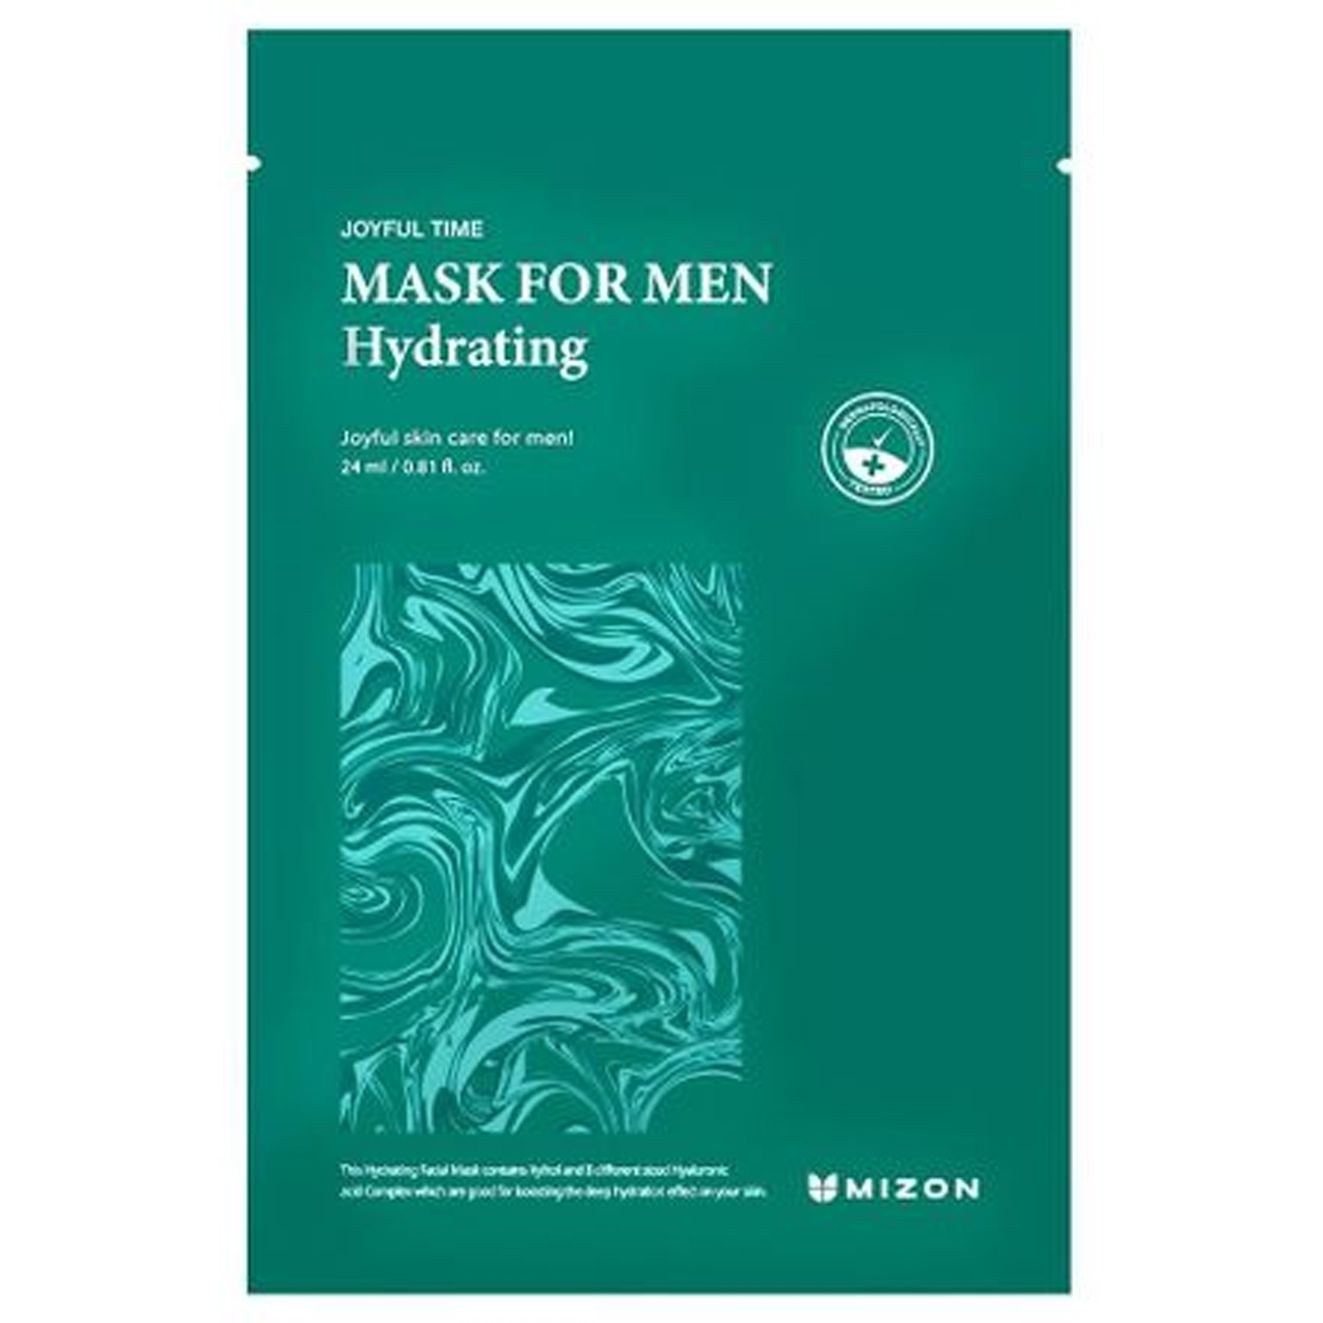 Тканевая маска для мужчин Mizon Joyful Time Mask For Men Hydrating, 24 мл - фото 1